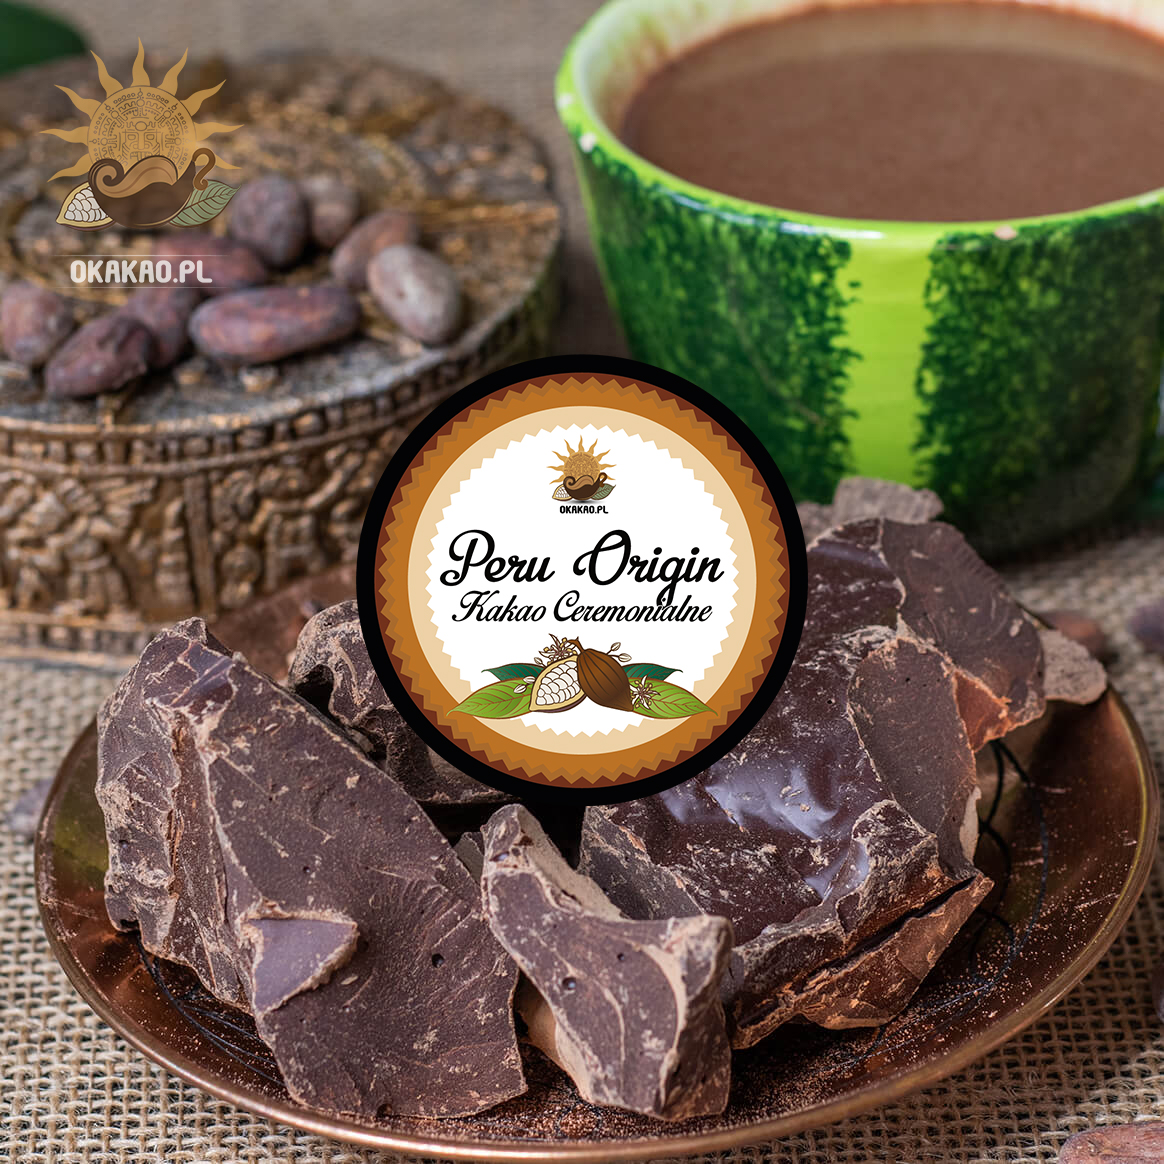 kakao-ceremonialne-peru-origin